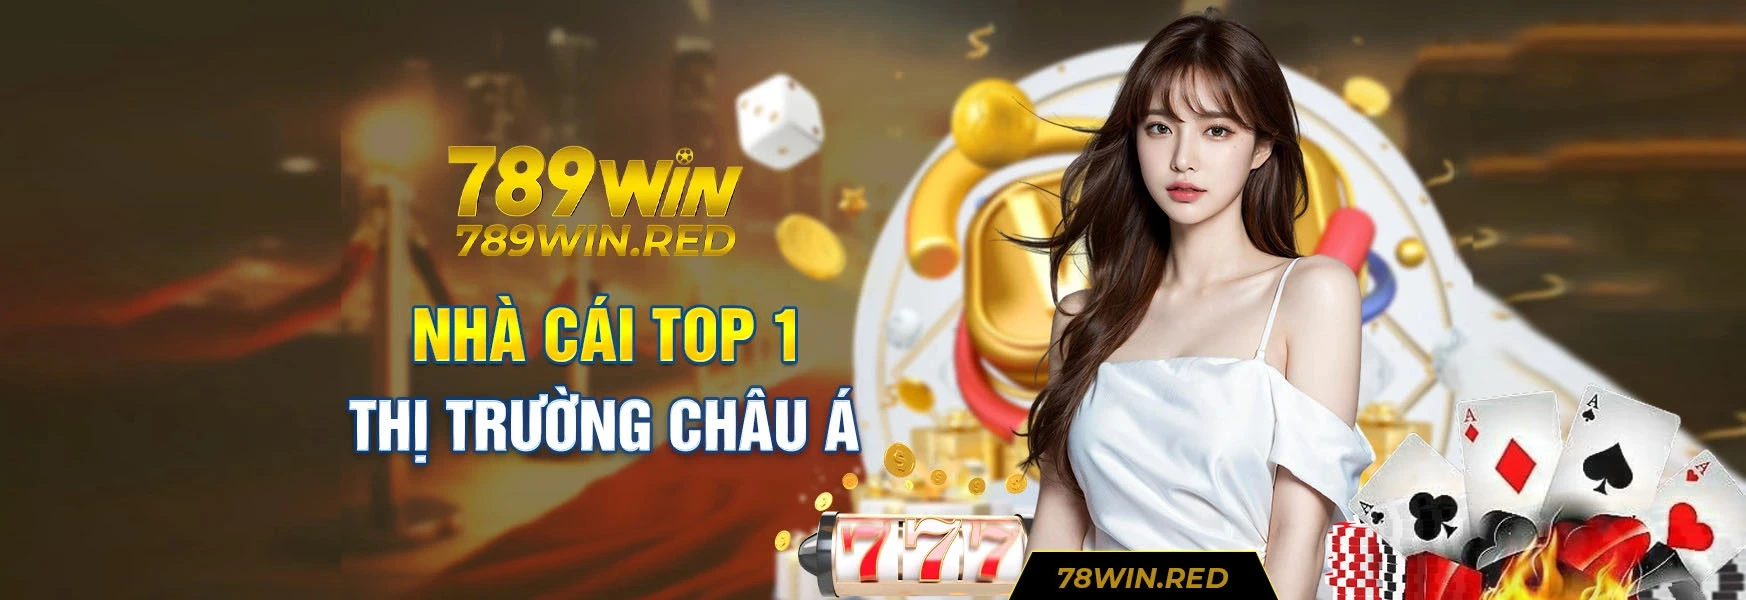 banner-78win-nha-cai-top-1-thi-truong